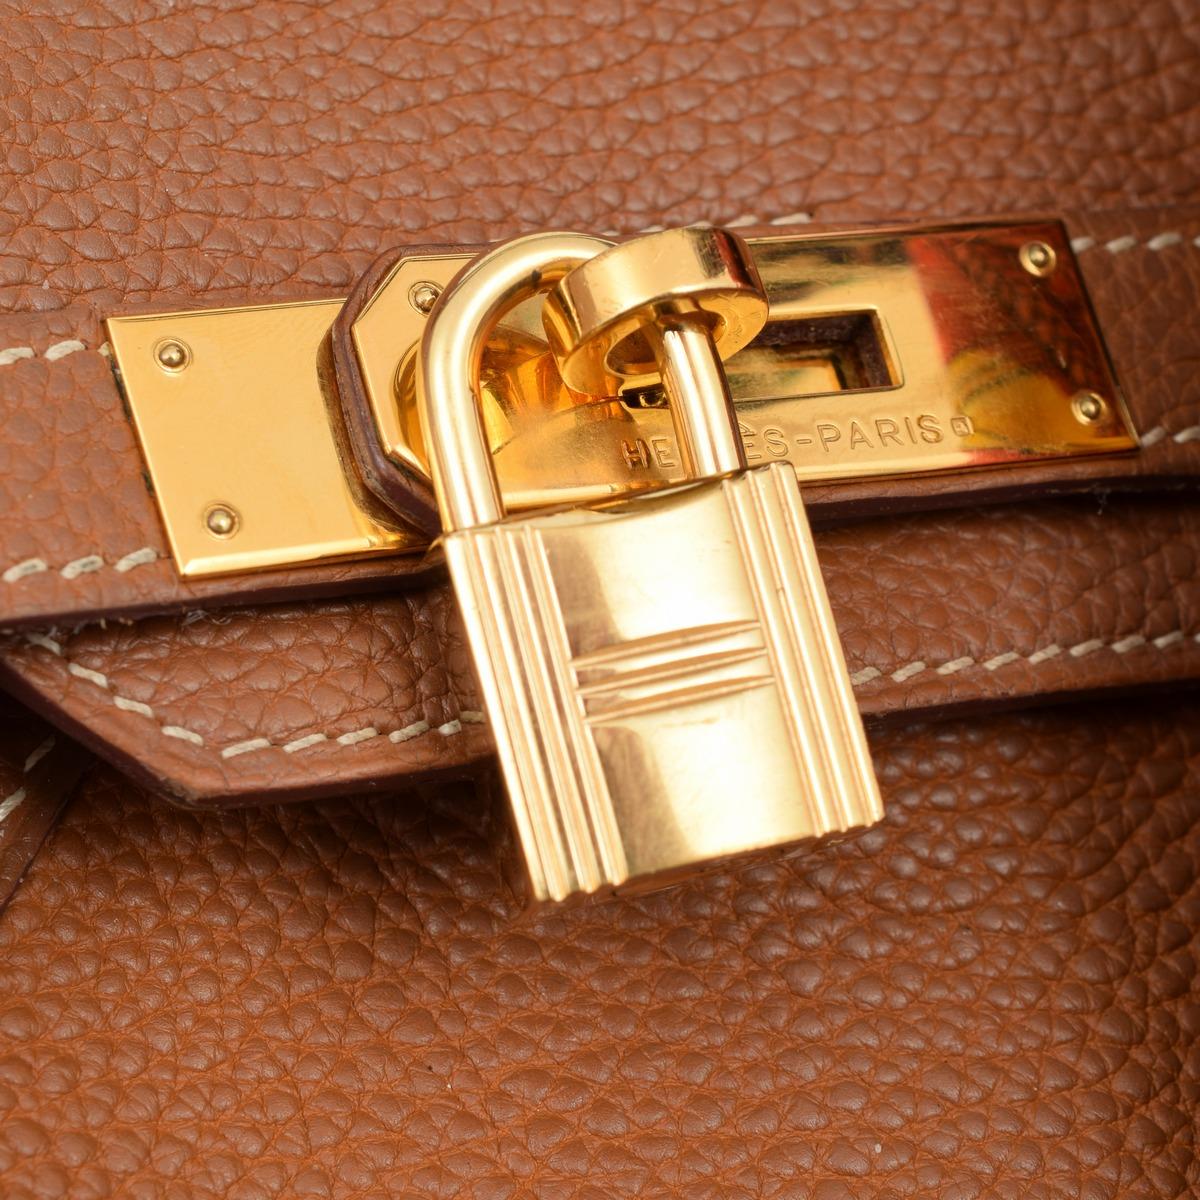 Hermes Clemence Birkin 30 Handbag with Gold Hardware  - Fresh from the Hermes Spa